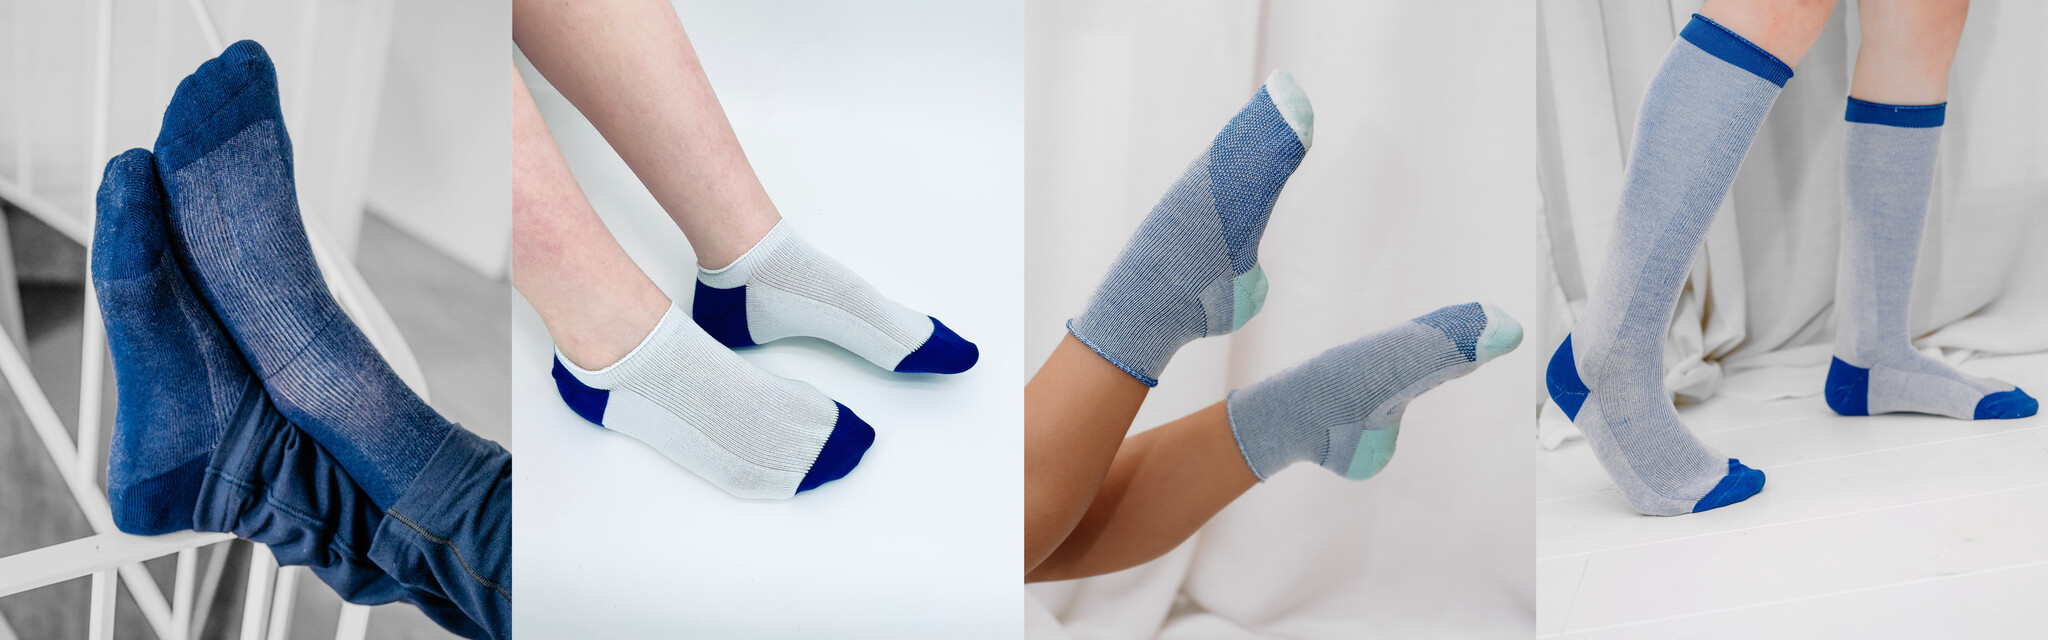 SAM Sensory-friendly naadloze sokken